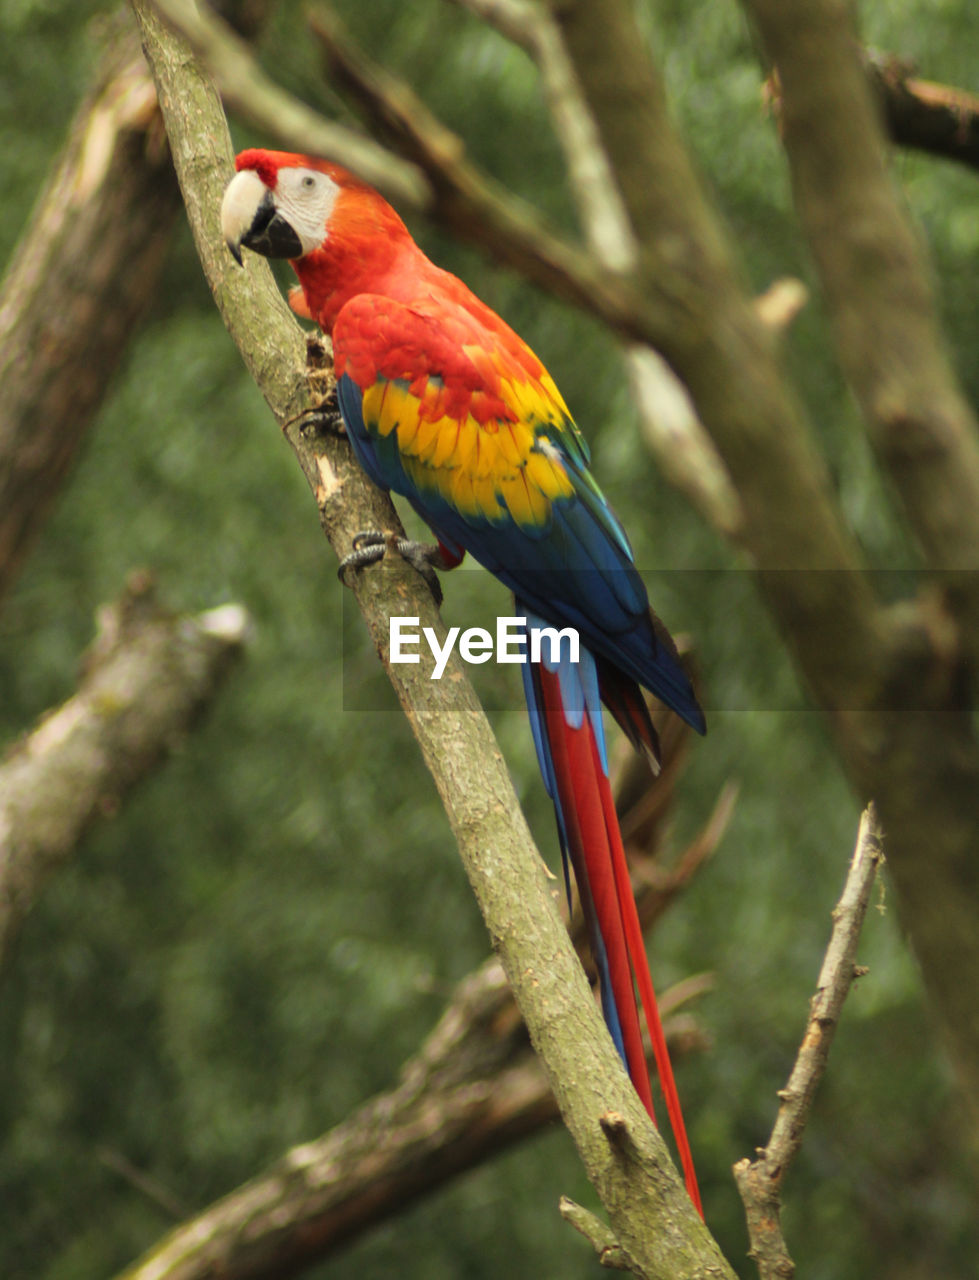 Scarlett macaw, ara macao, on a tree branch 